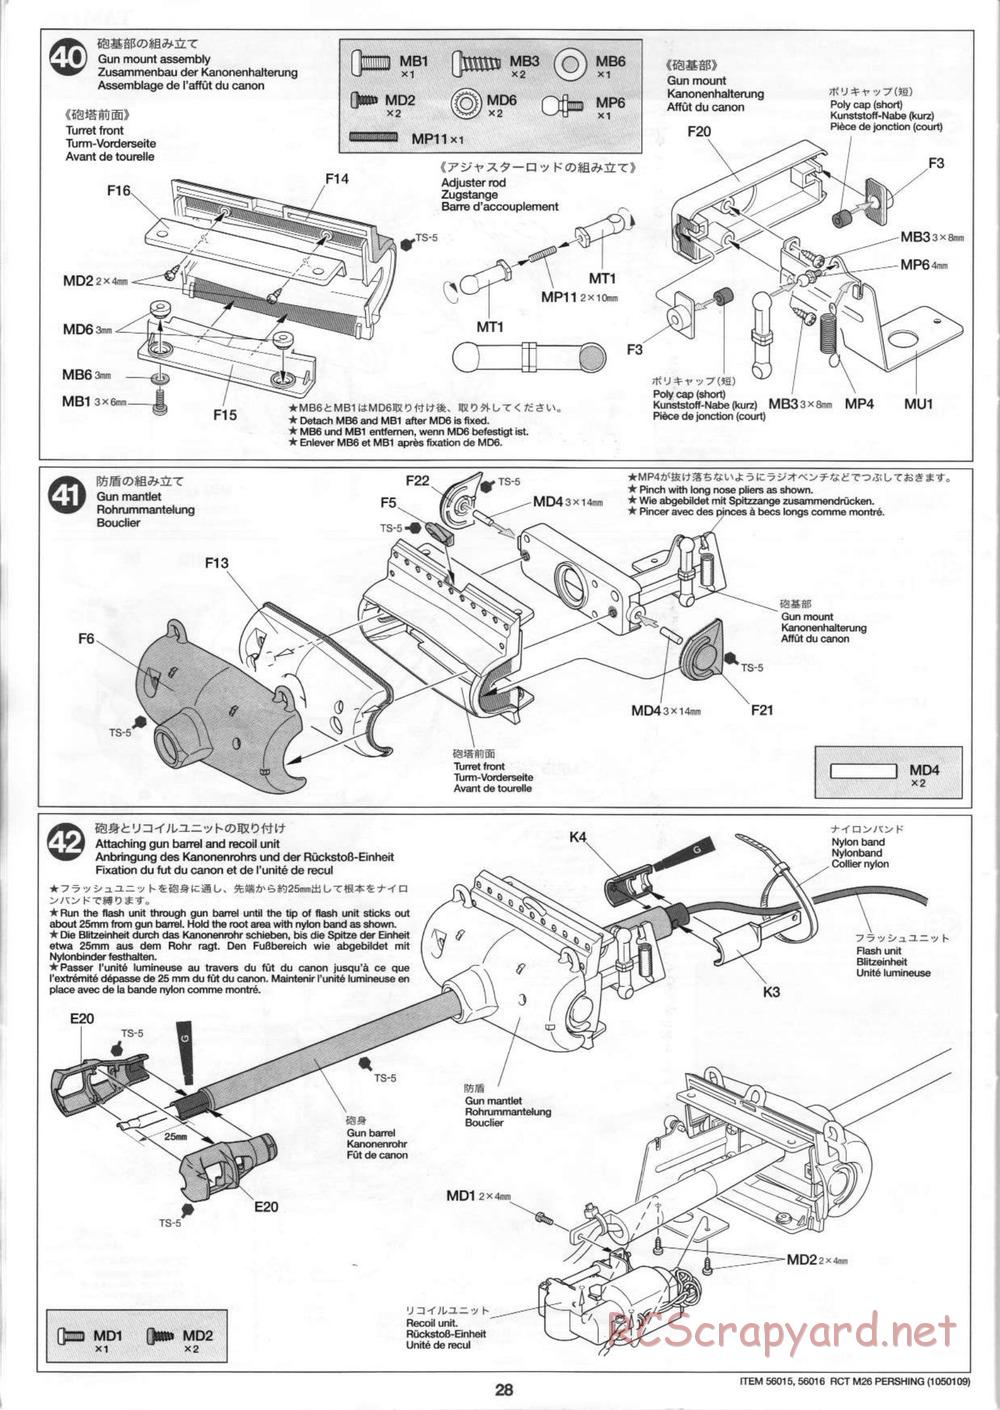 Tamiya - M26 Pershing - 1/16 Scale Chassis - Manual - Page 28